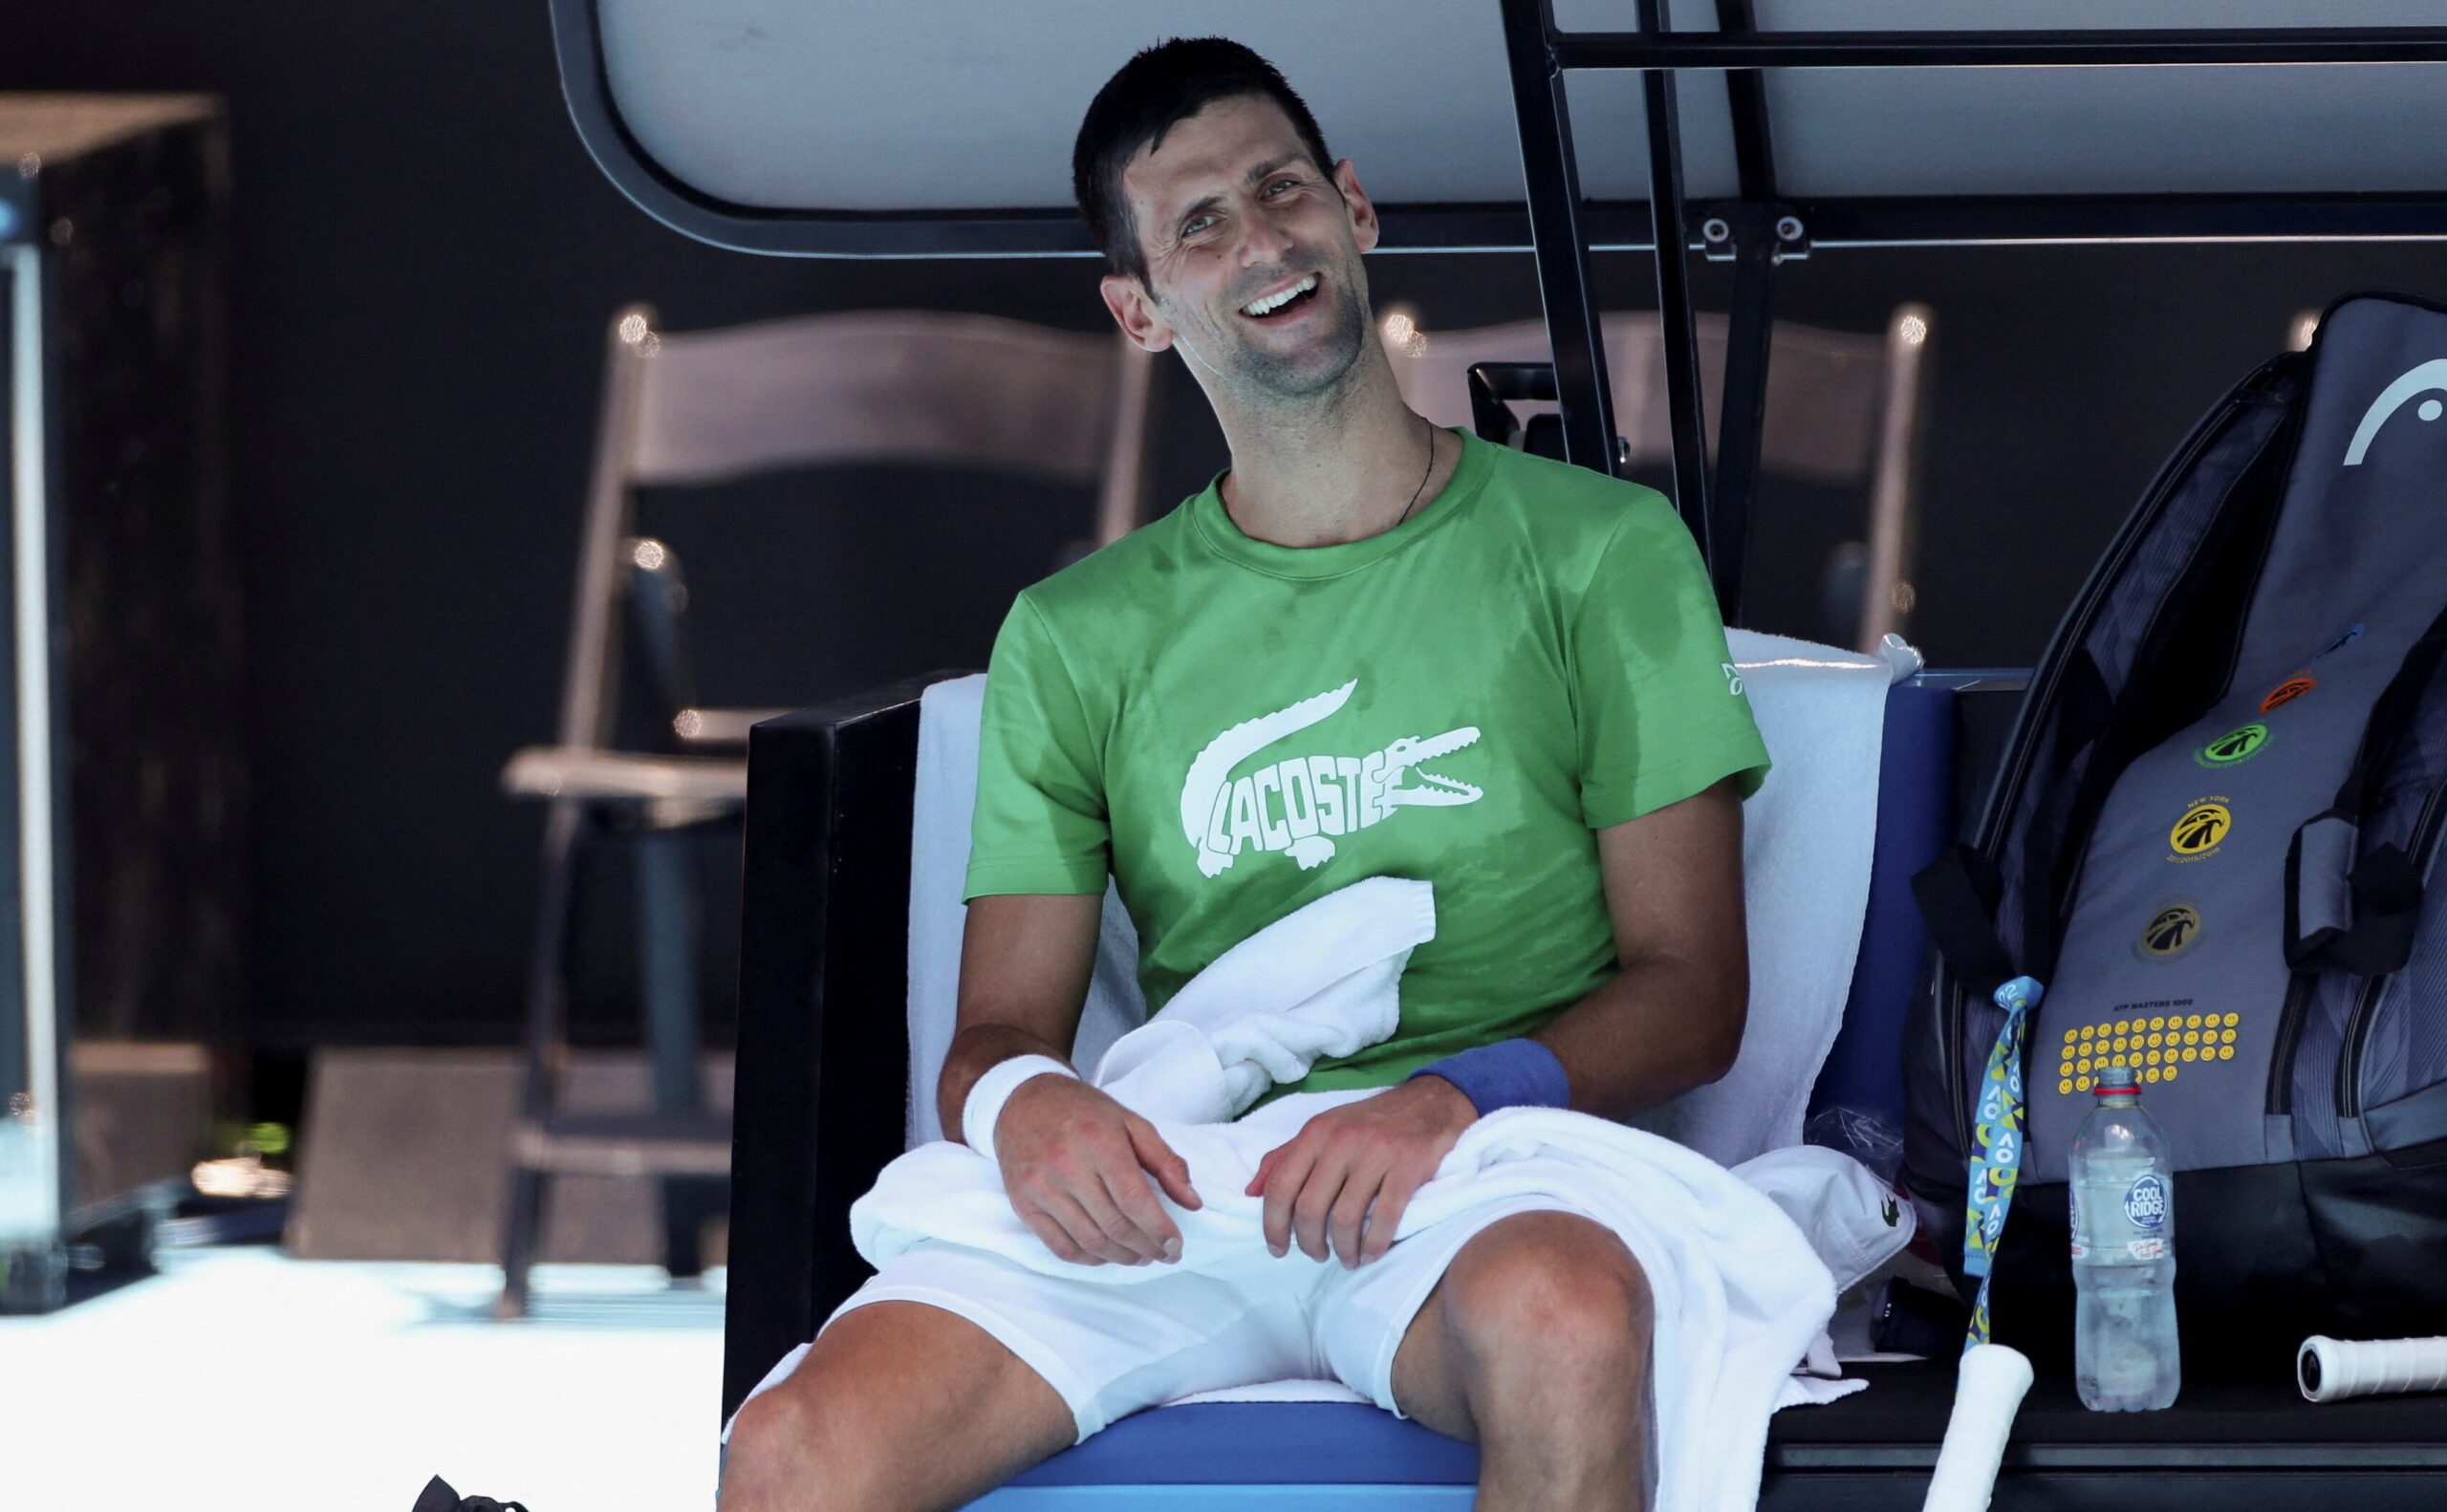 Anger over Djokovic visa saga dominates conversations in Australia